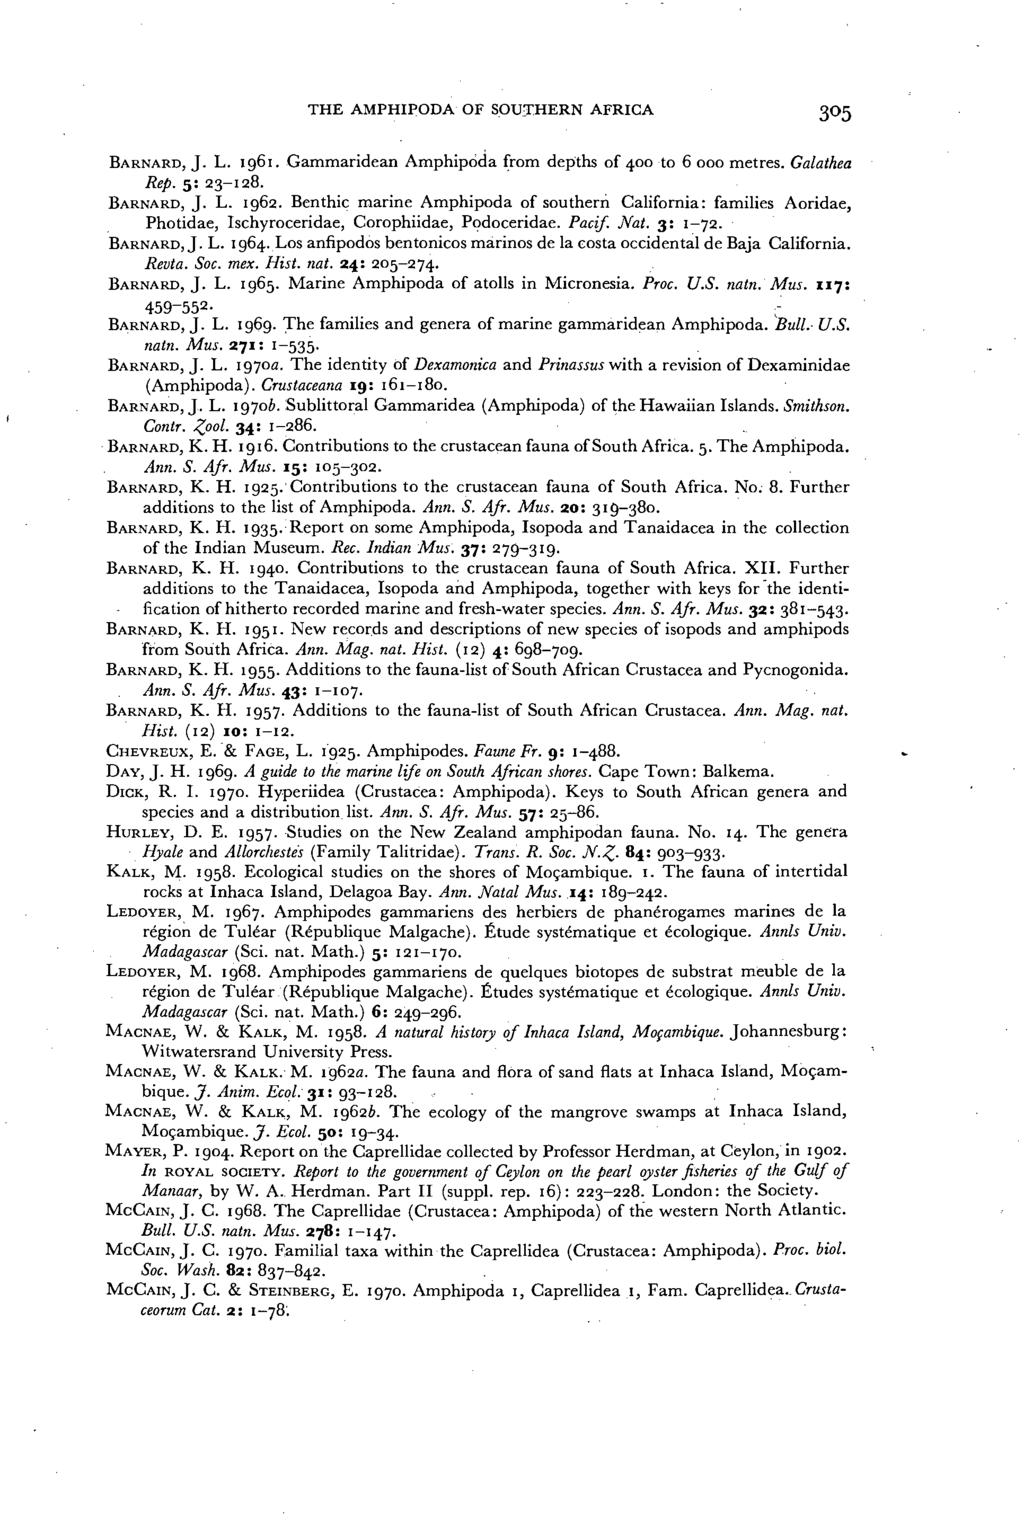 THE AMPHIPODA OF SOU:I:HERN AFRICA BARNARD, J. L. 1961. Gammaridean Amphipcicla from depths of 400 to 6000 metres. Galathea Rep. 5: 23-128. BARNARD, J. L. 1962.